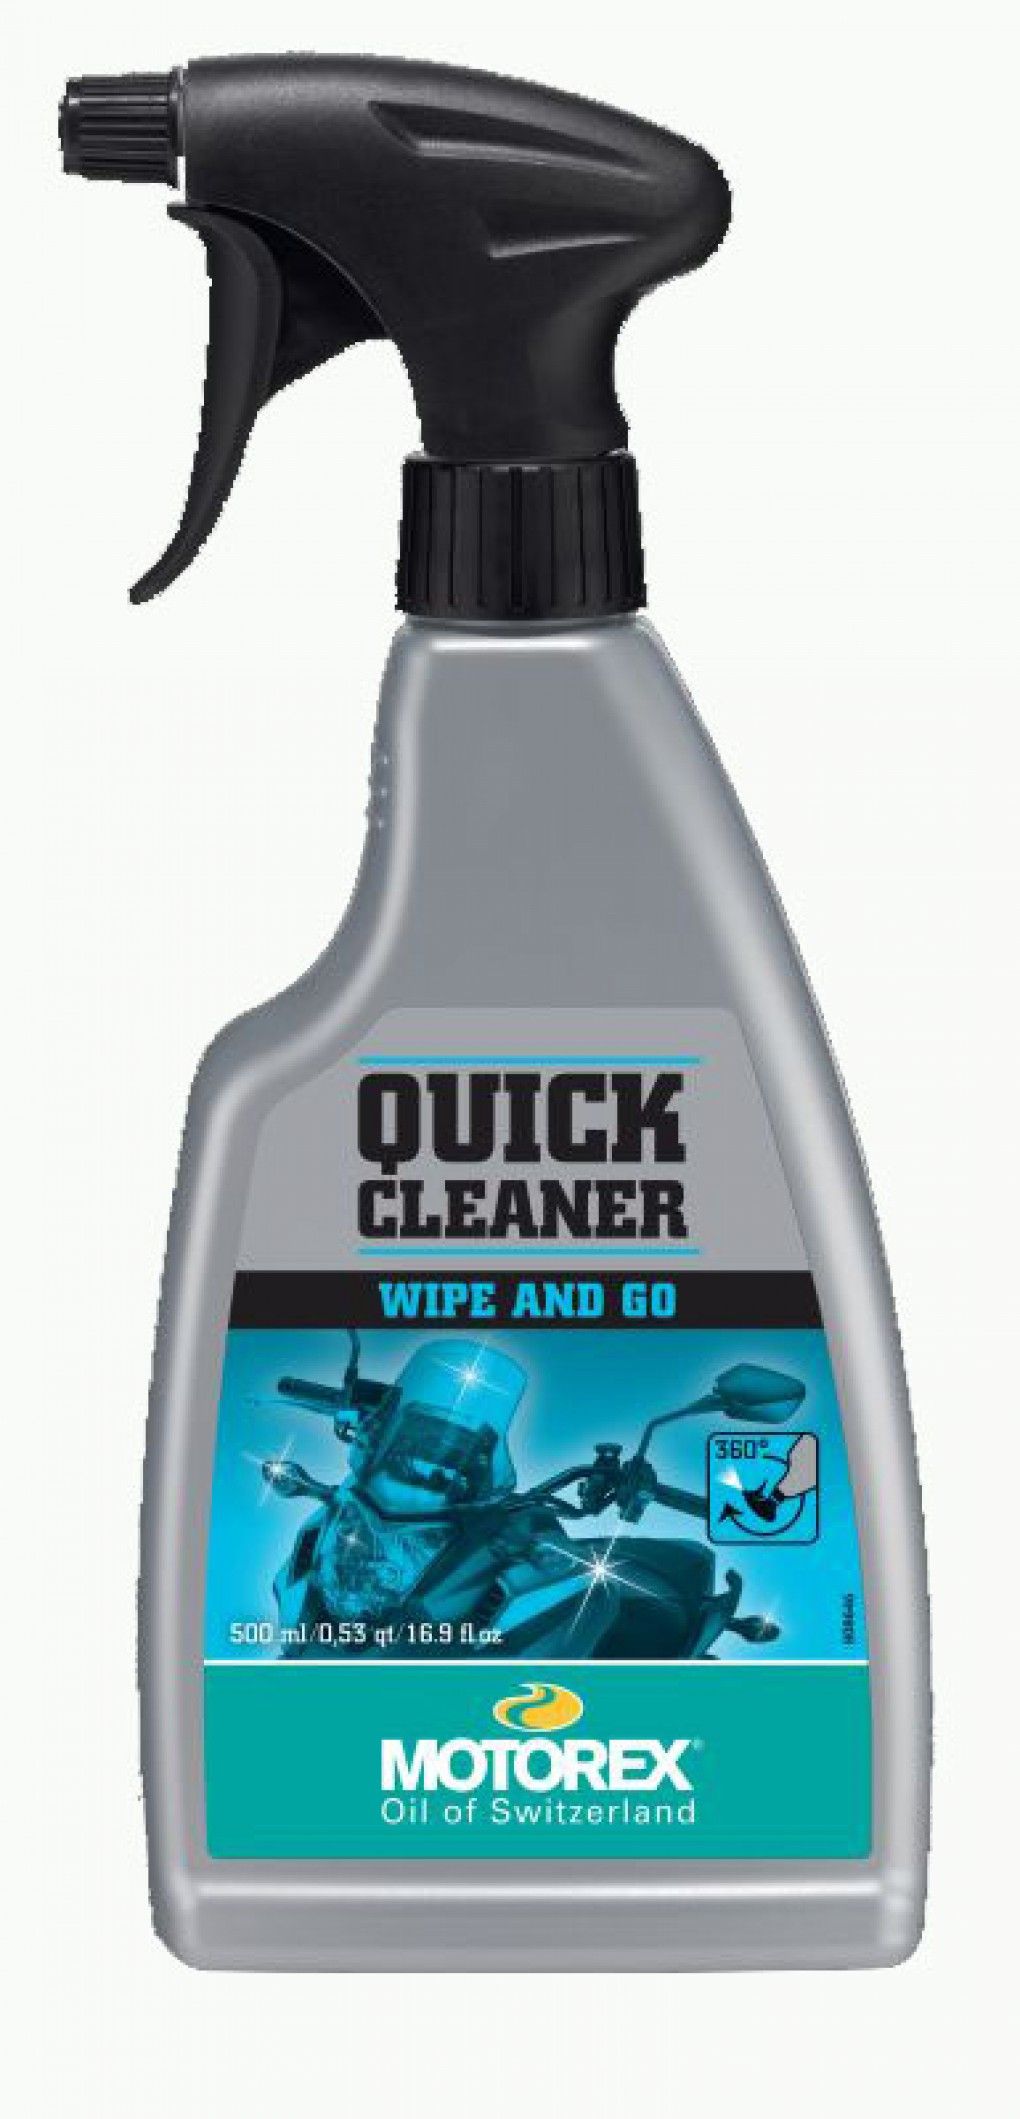 motorex quick cleaner review